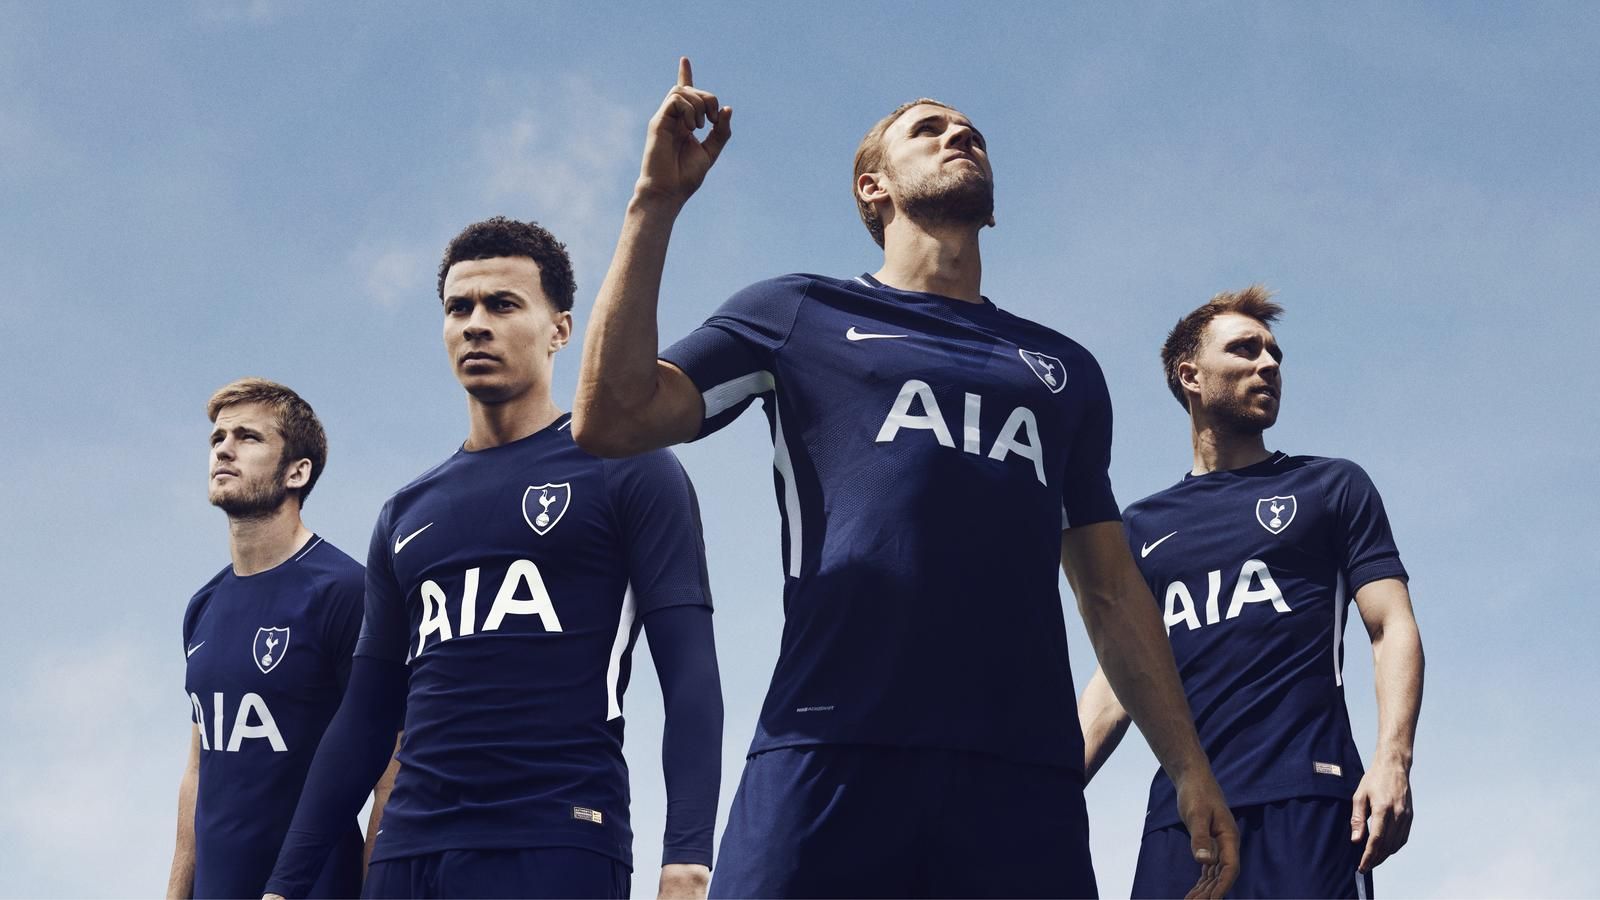 Nike Tottenham 2017-18 Third Authentic Match Jersey